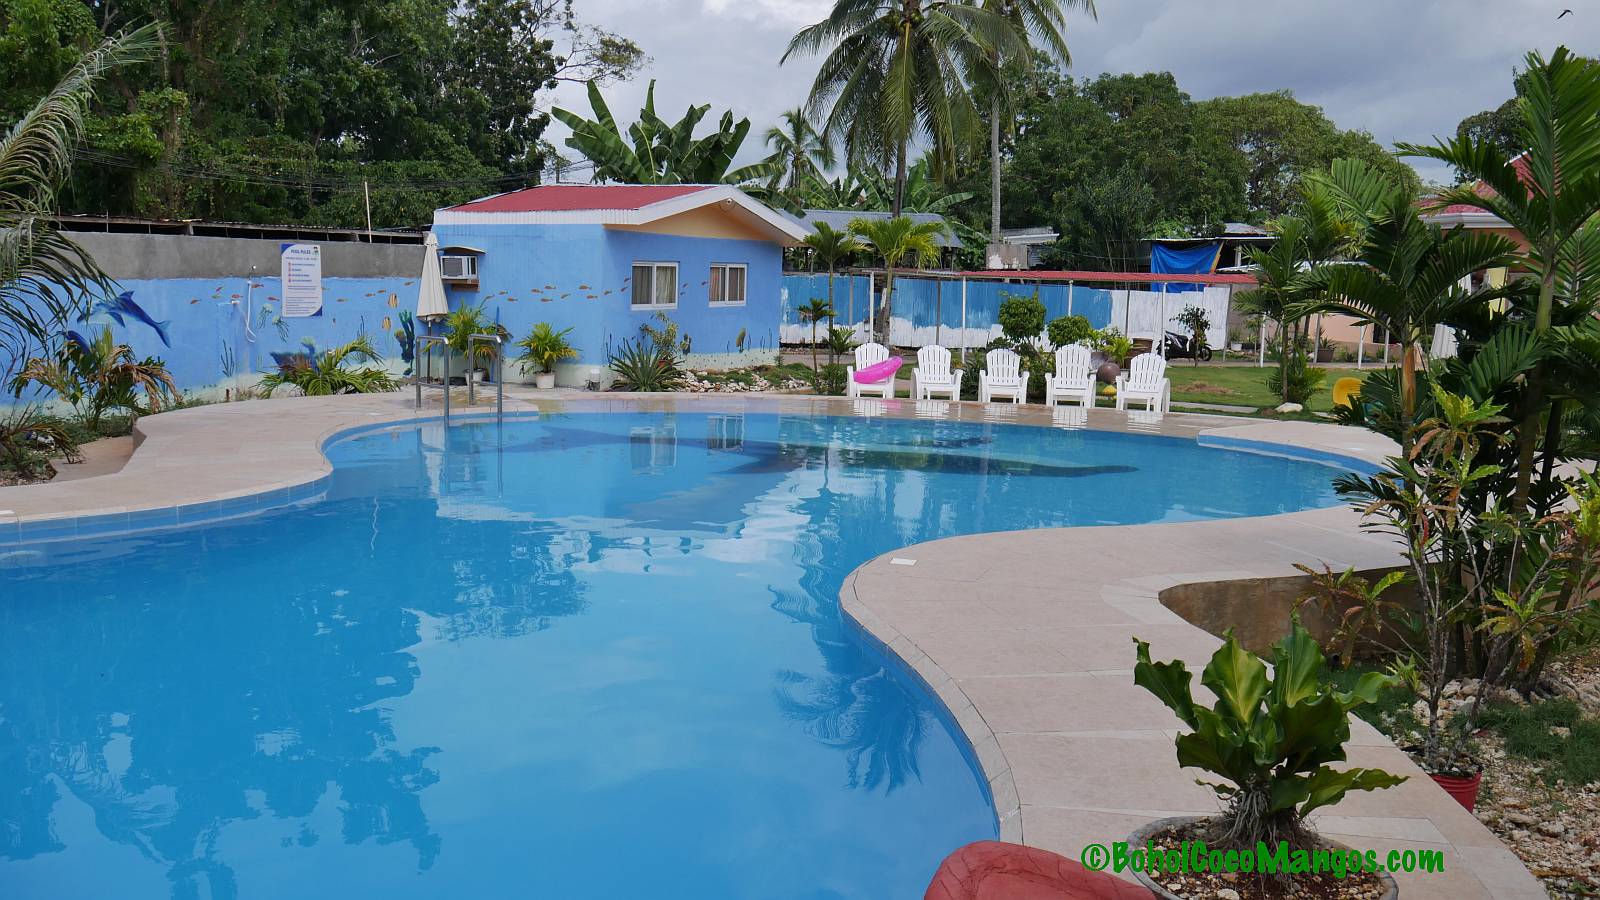 Coco Mangos Place Resort Panglao Bohol018